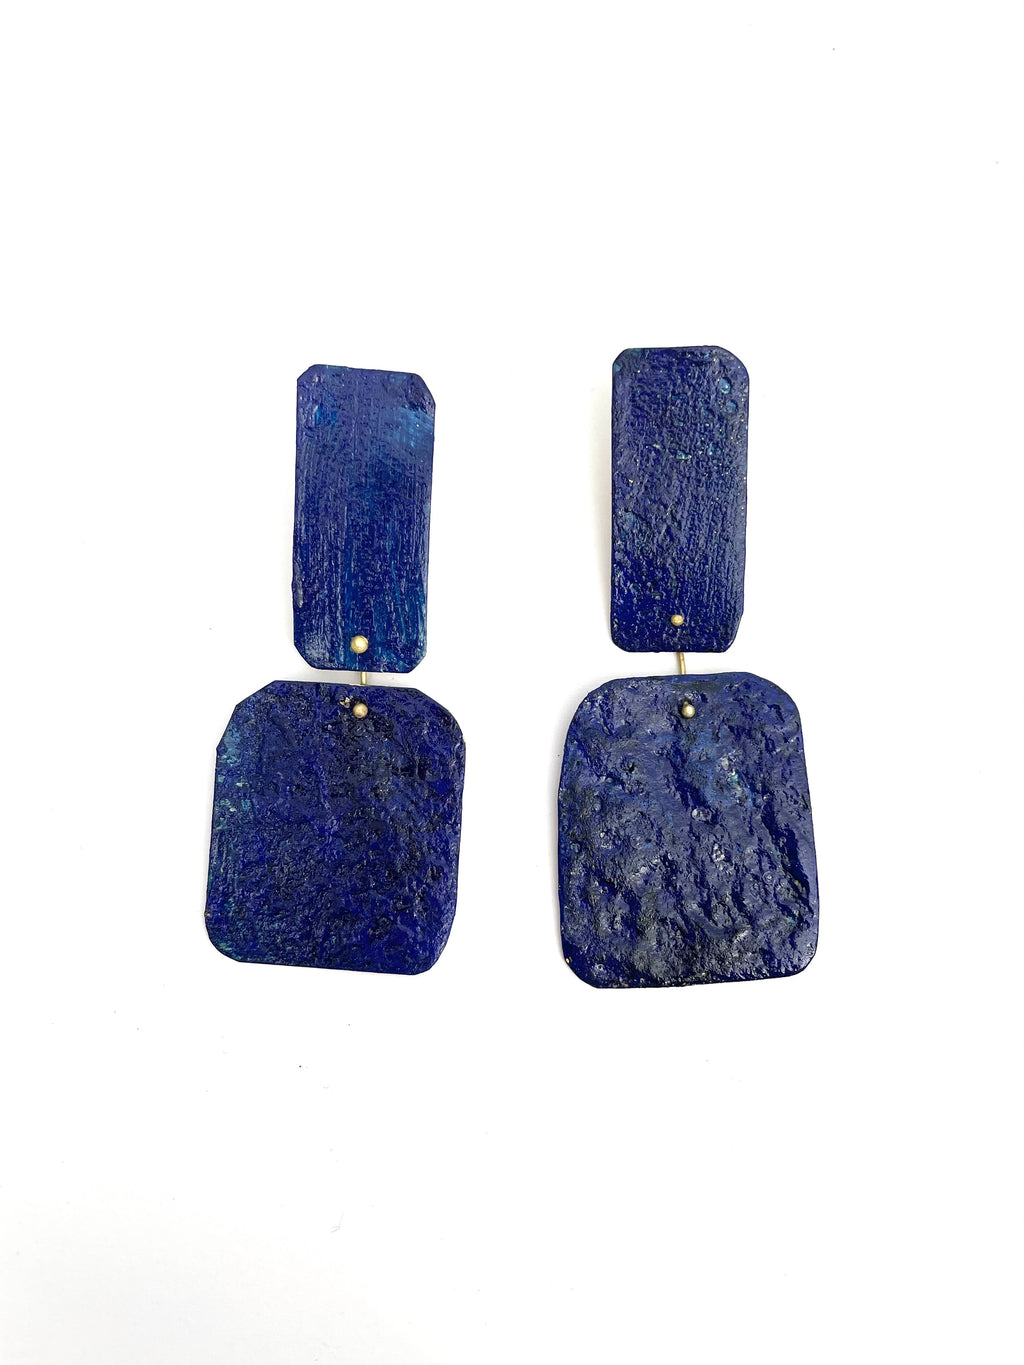 Dora Haralambaki, HD24 Blue Rectangle Square Pendant Earrings - Tiffany Treloar